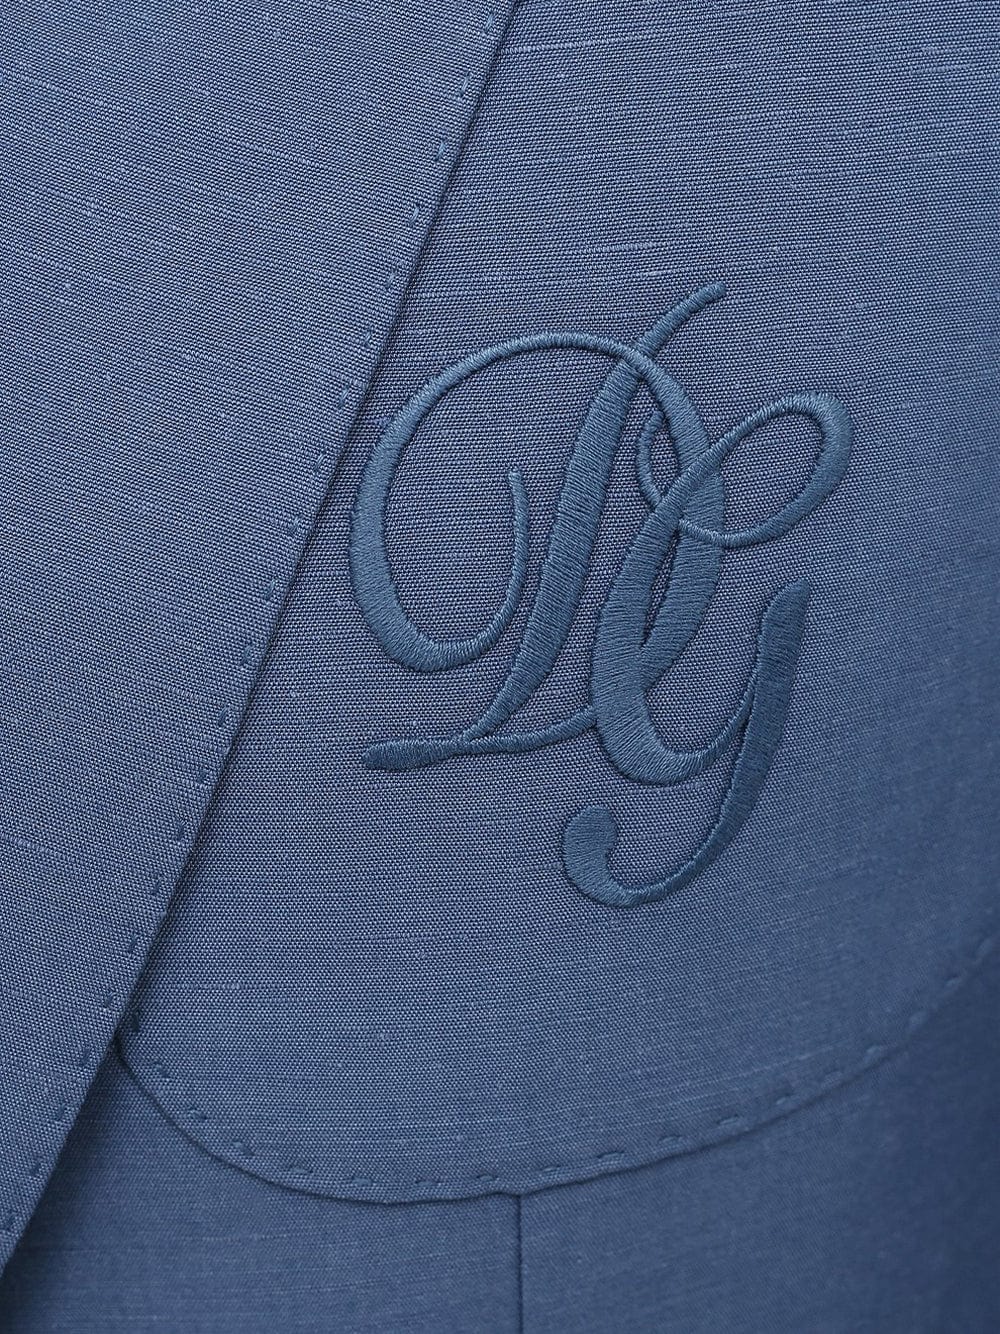 Dolce & Gabbana DG-Monogram Logo Blazer